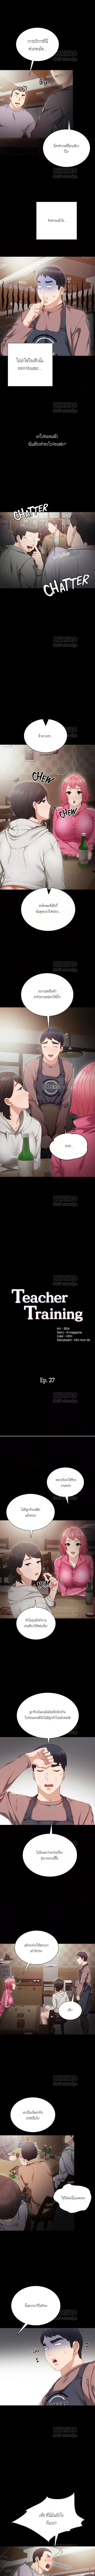 Teaching Practice1